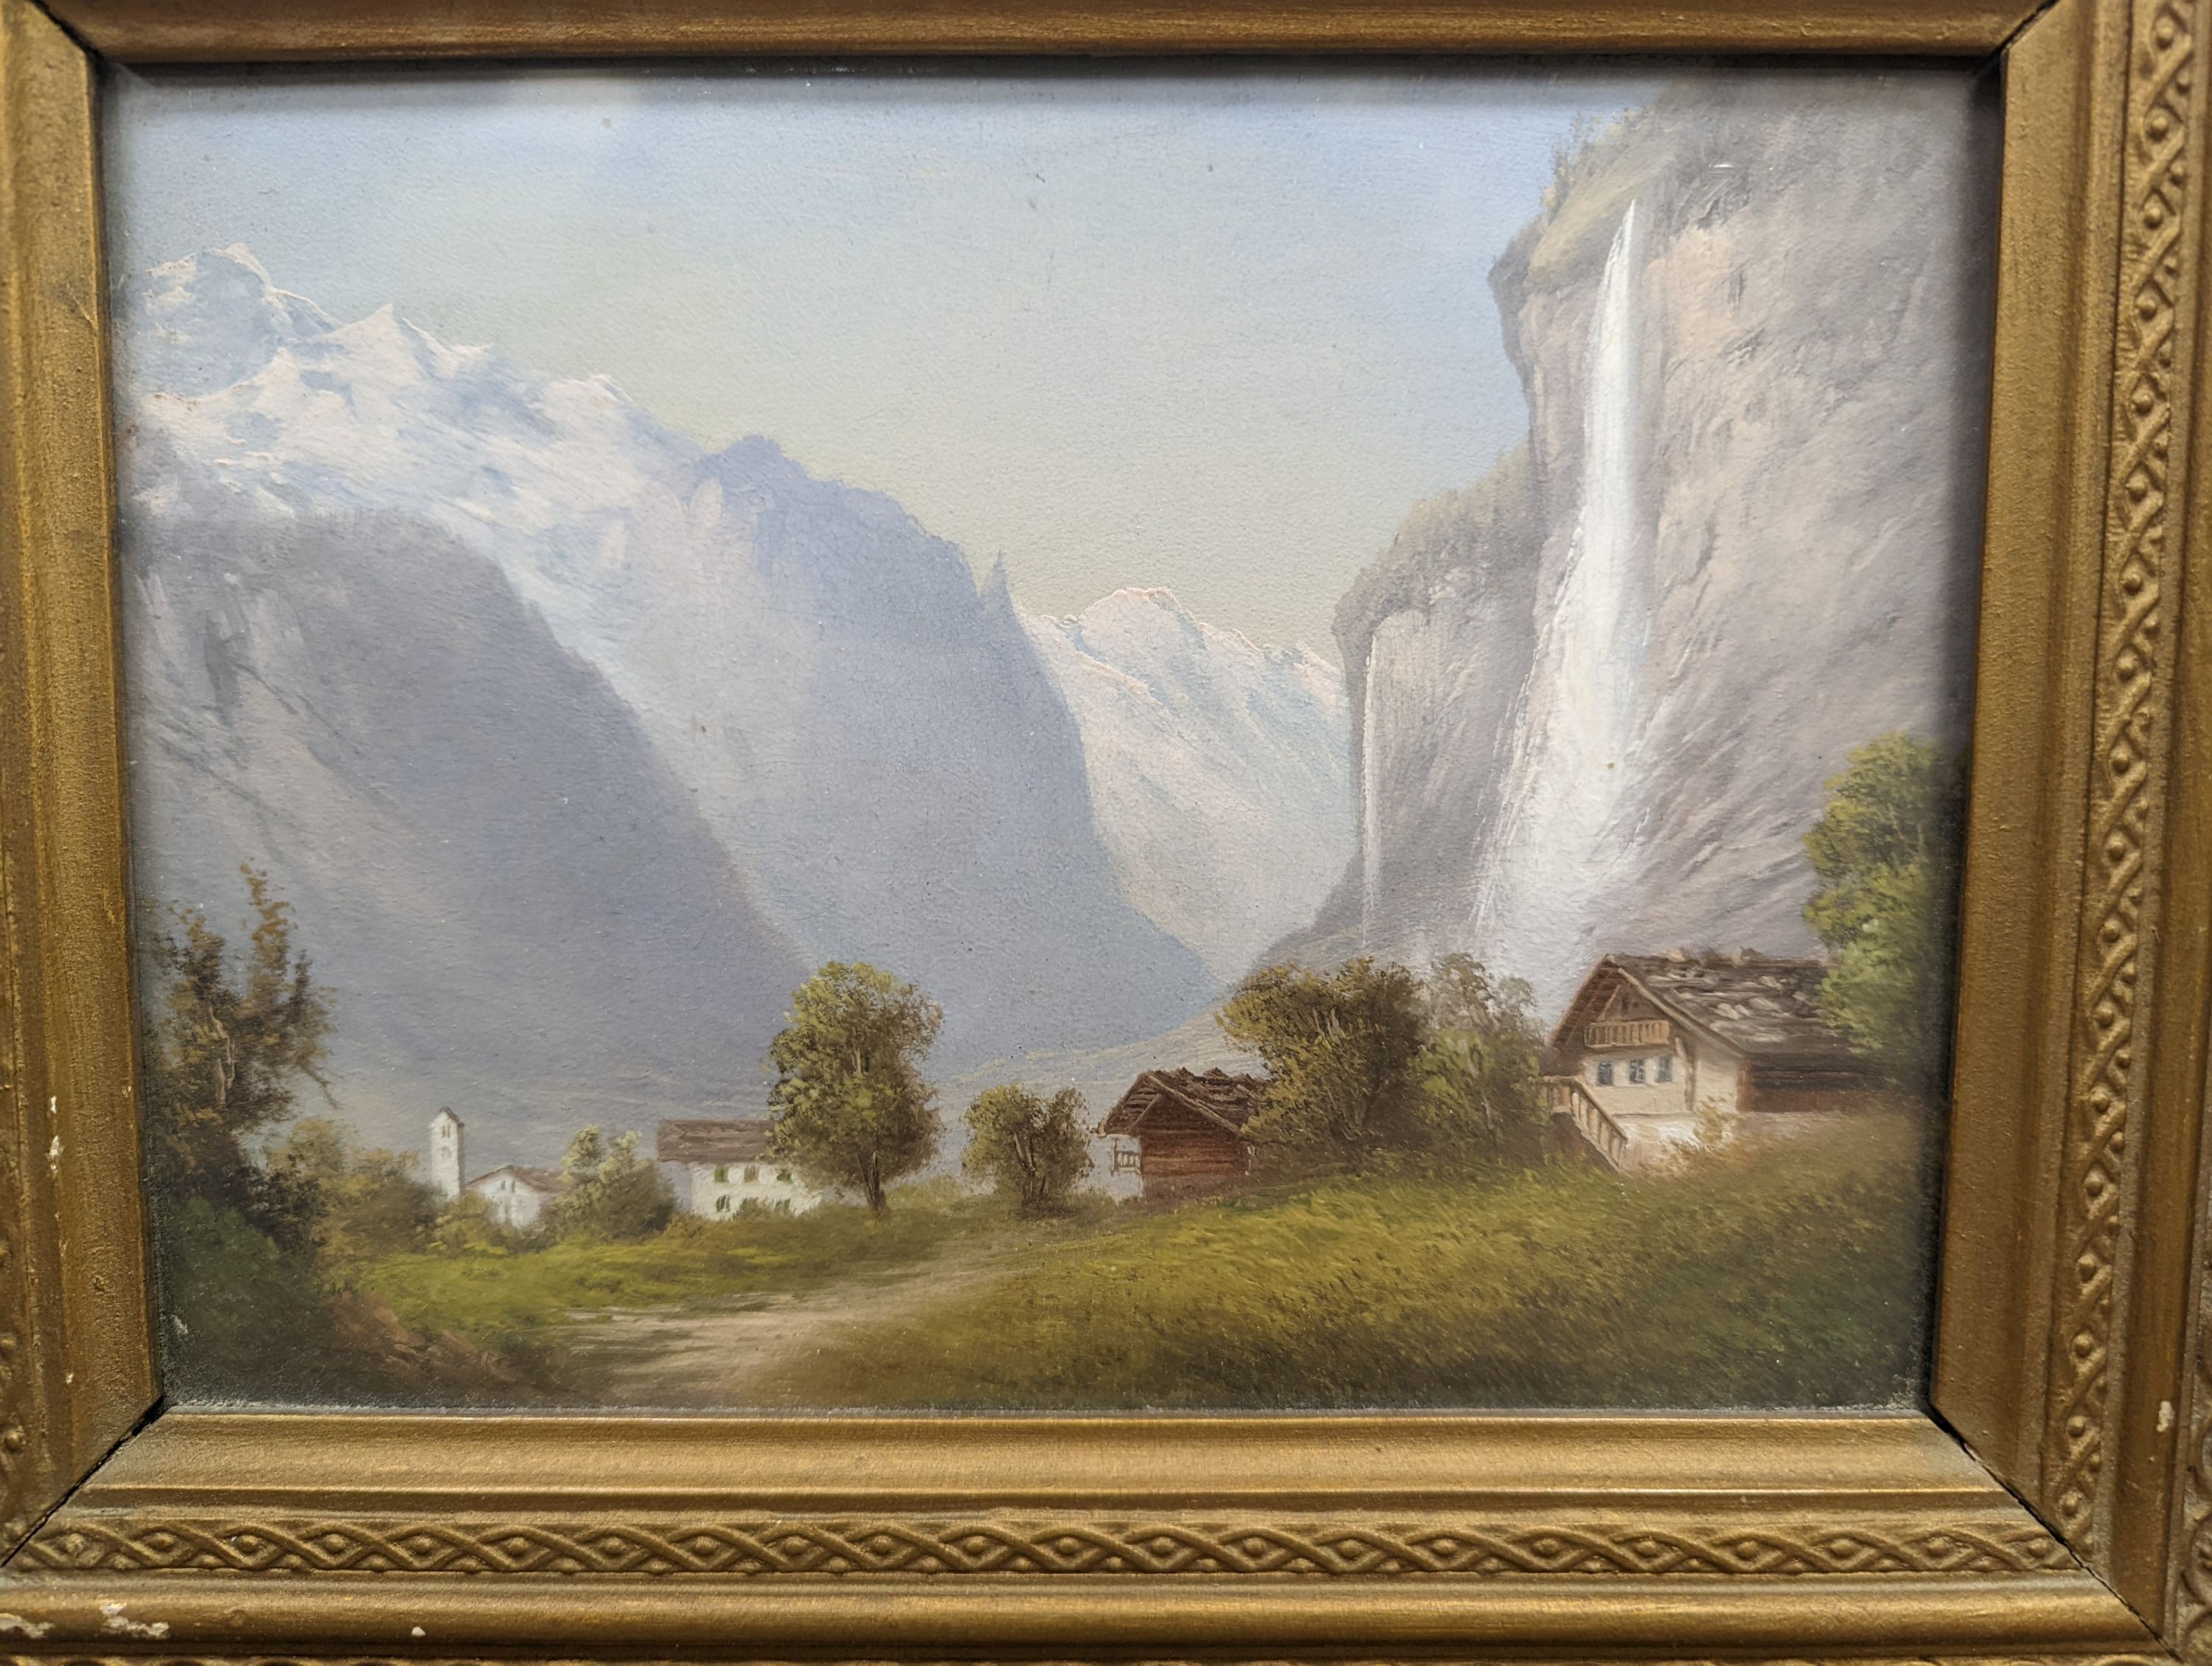 Late 19th century Swiss School, pair of oils on board, Swiss scenes, Wetterhorn and Waterfall, 15 x 20cm